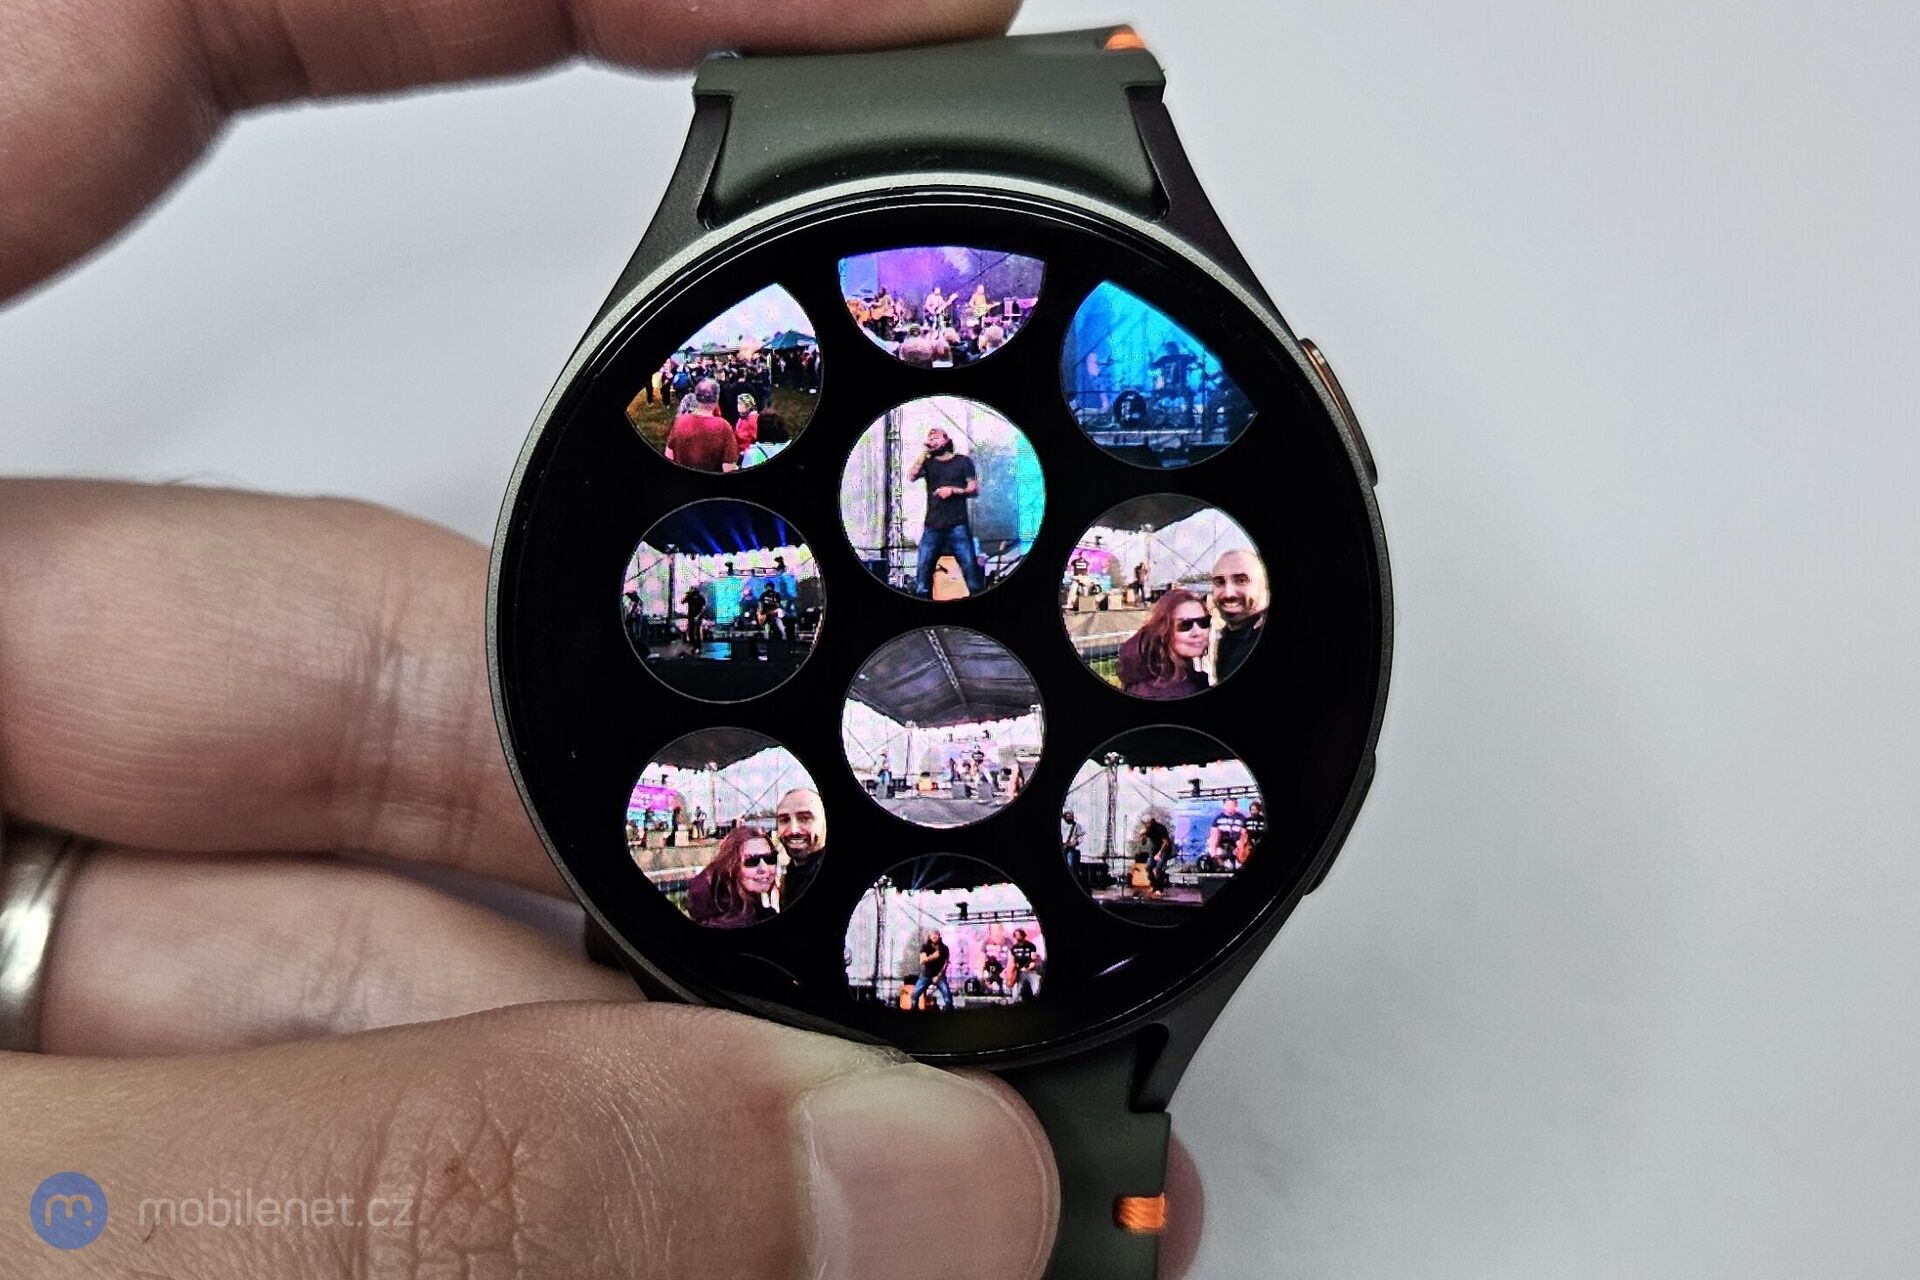 Samsung Galaxy Watch7